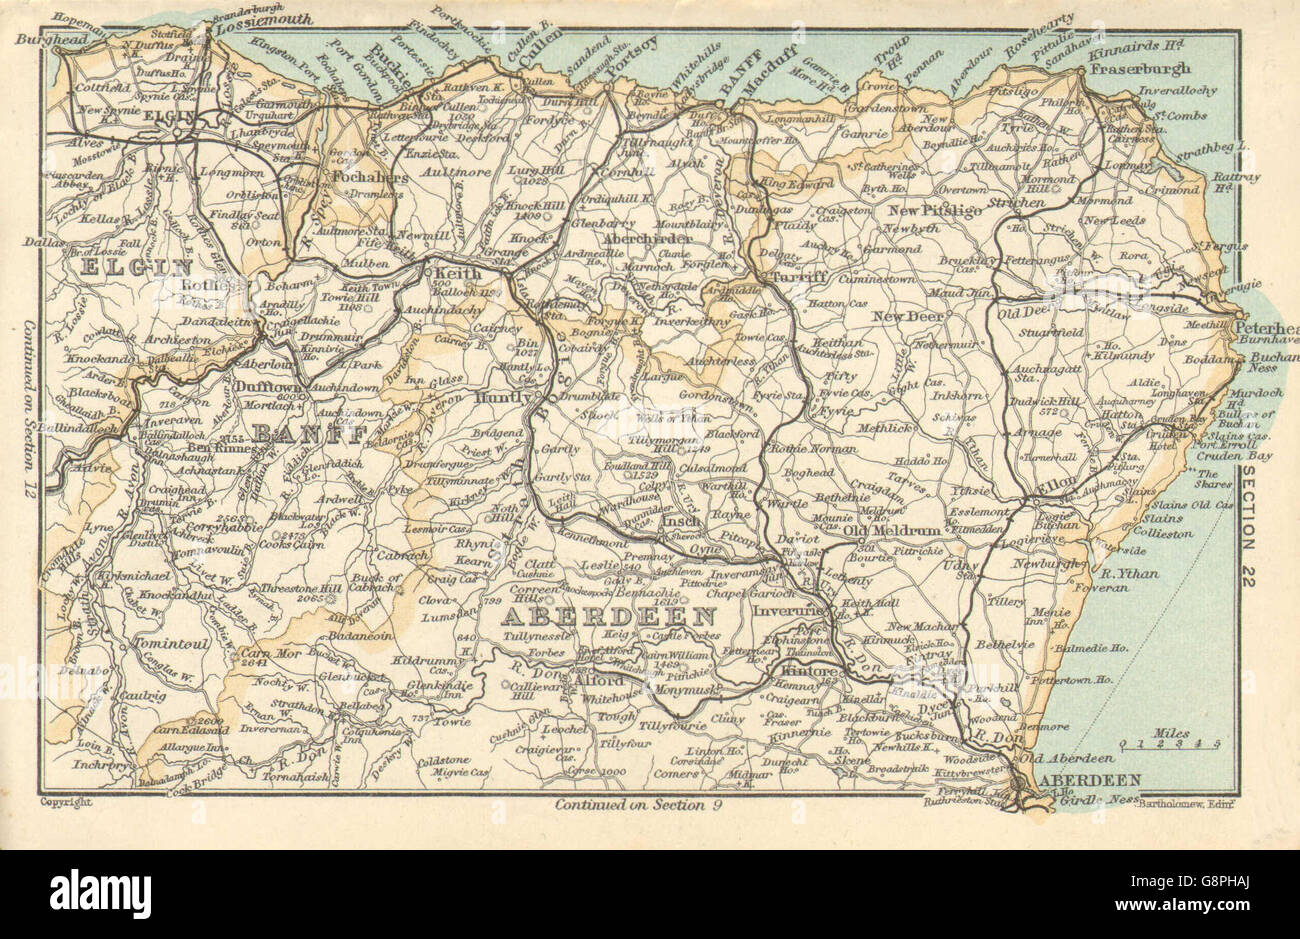 ABERDEENSHIRE & MORAY. Banffshire Elgin. Scotland. Vintage map, 1905 Stock Photo